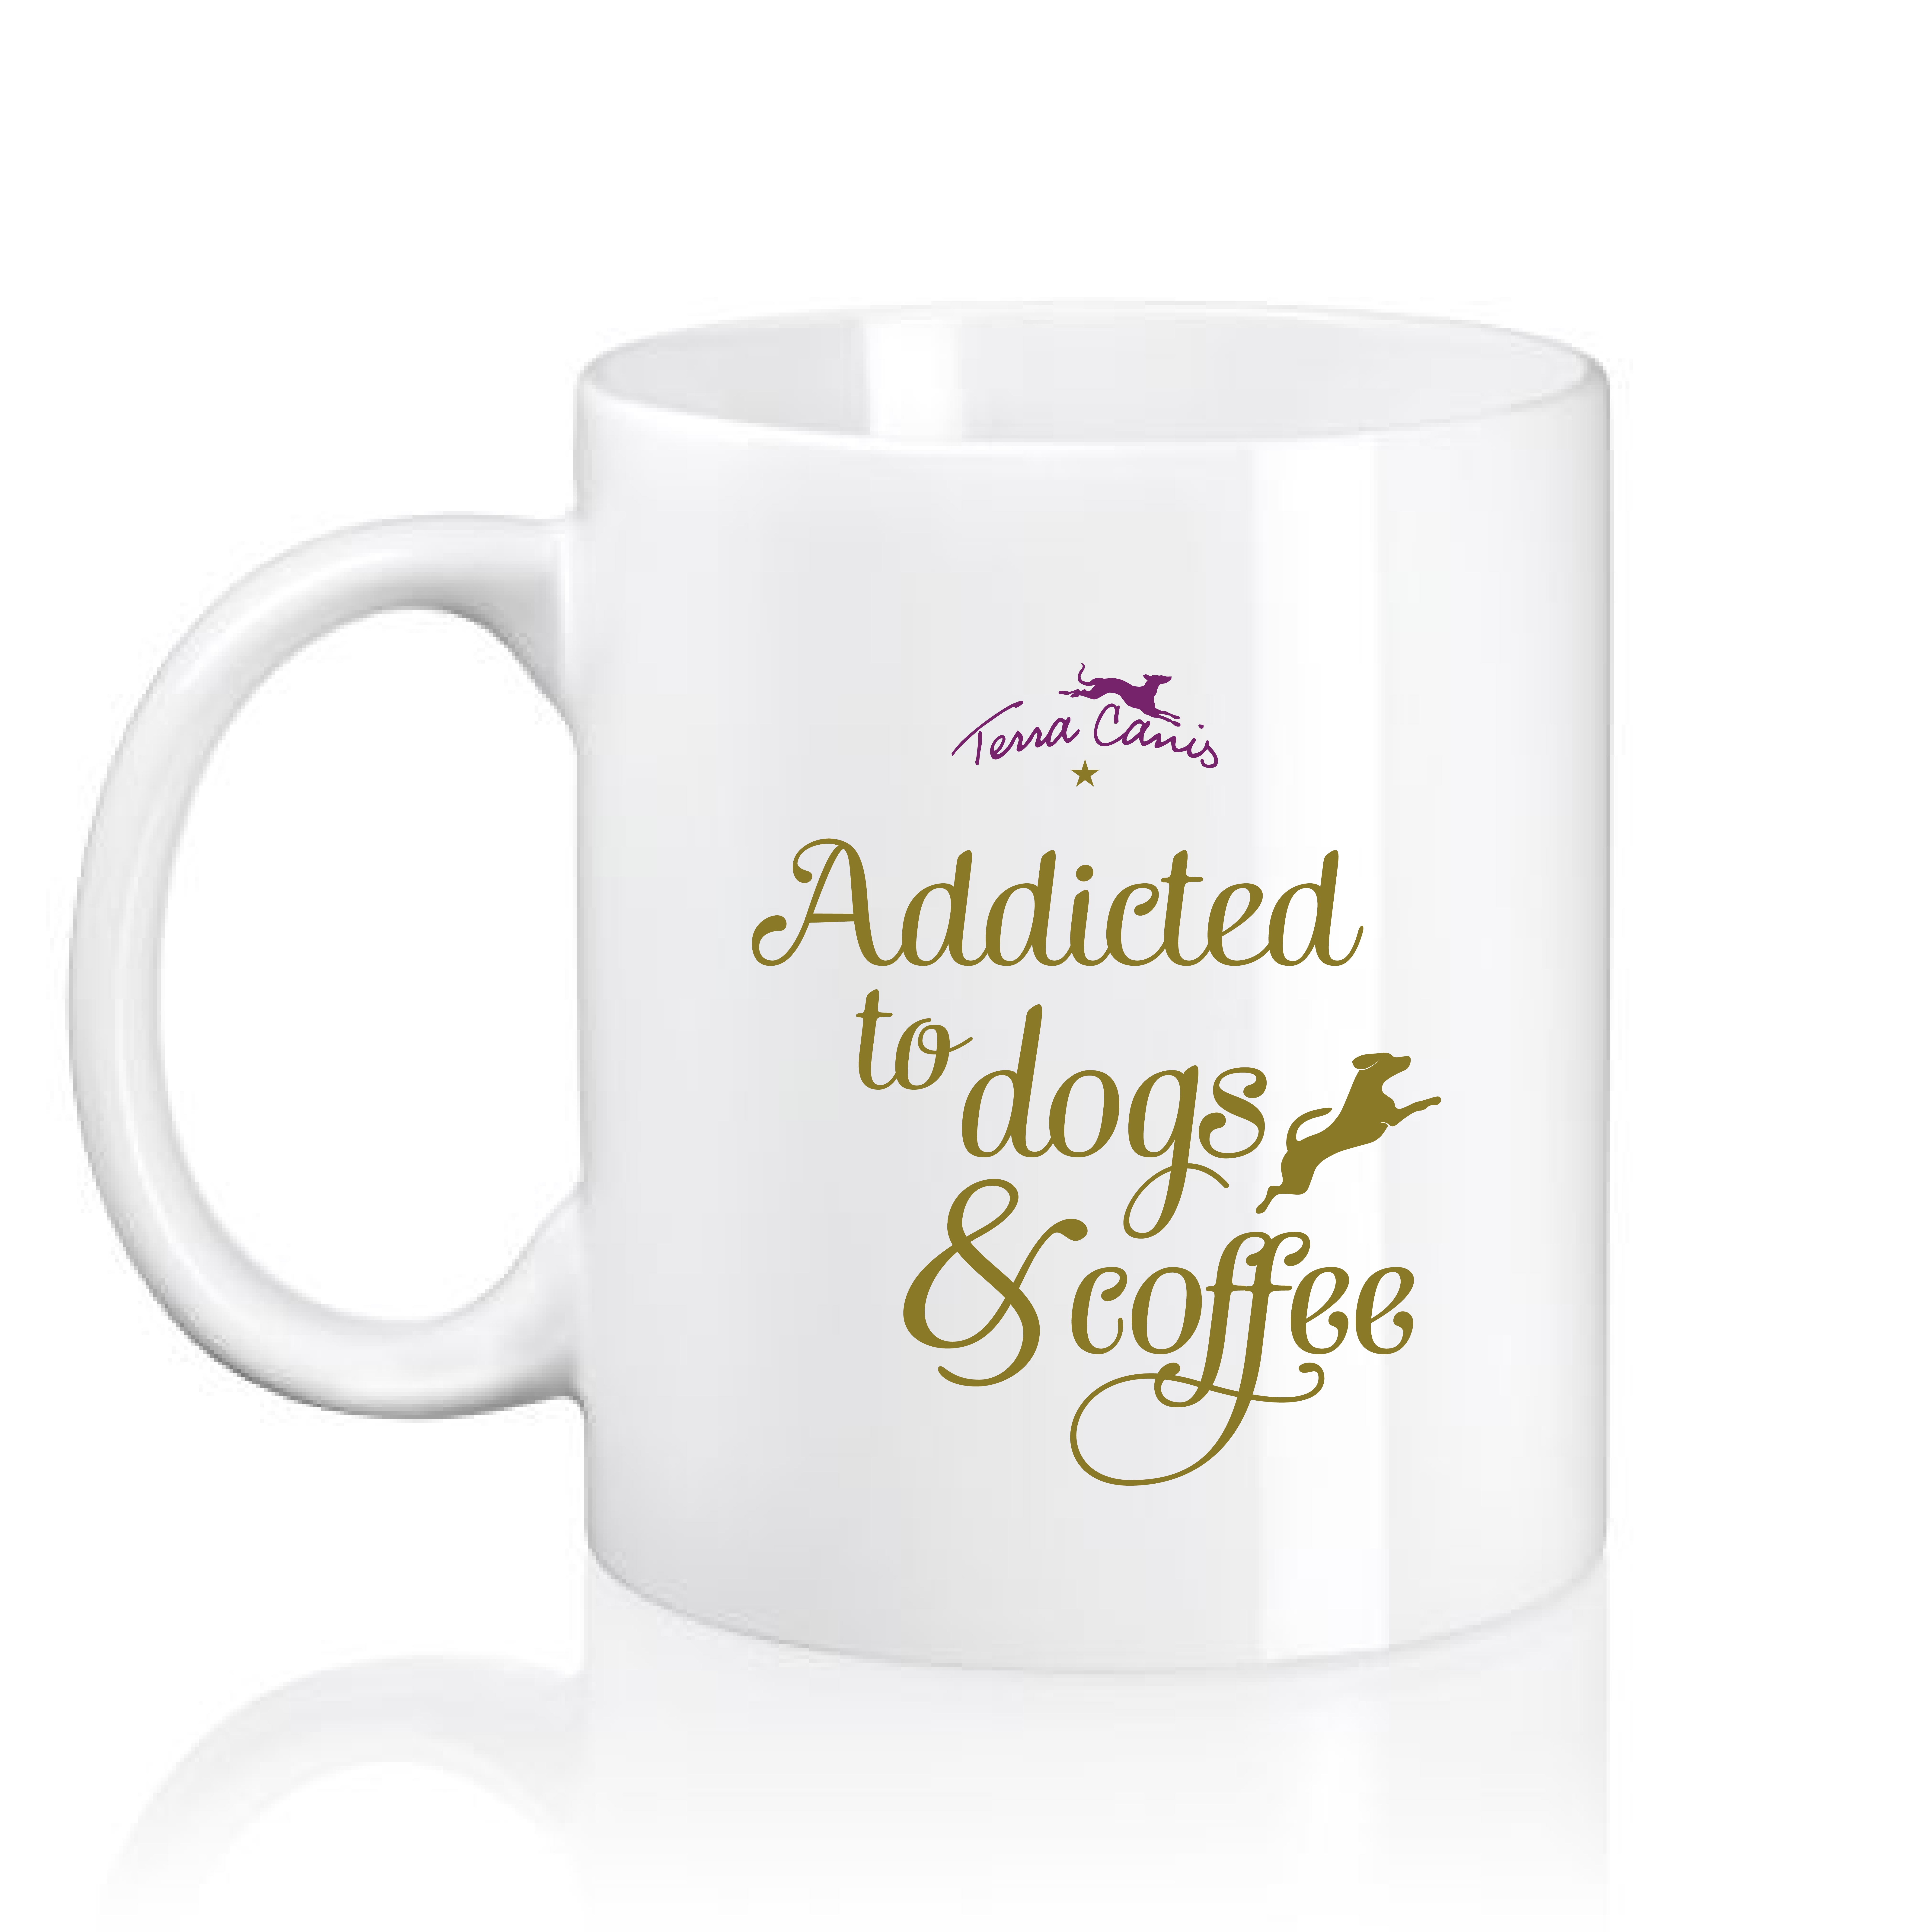 Tasse "Addicted to dogs & coffee"